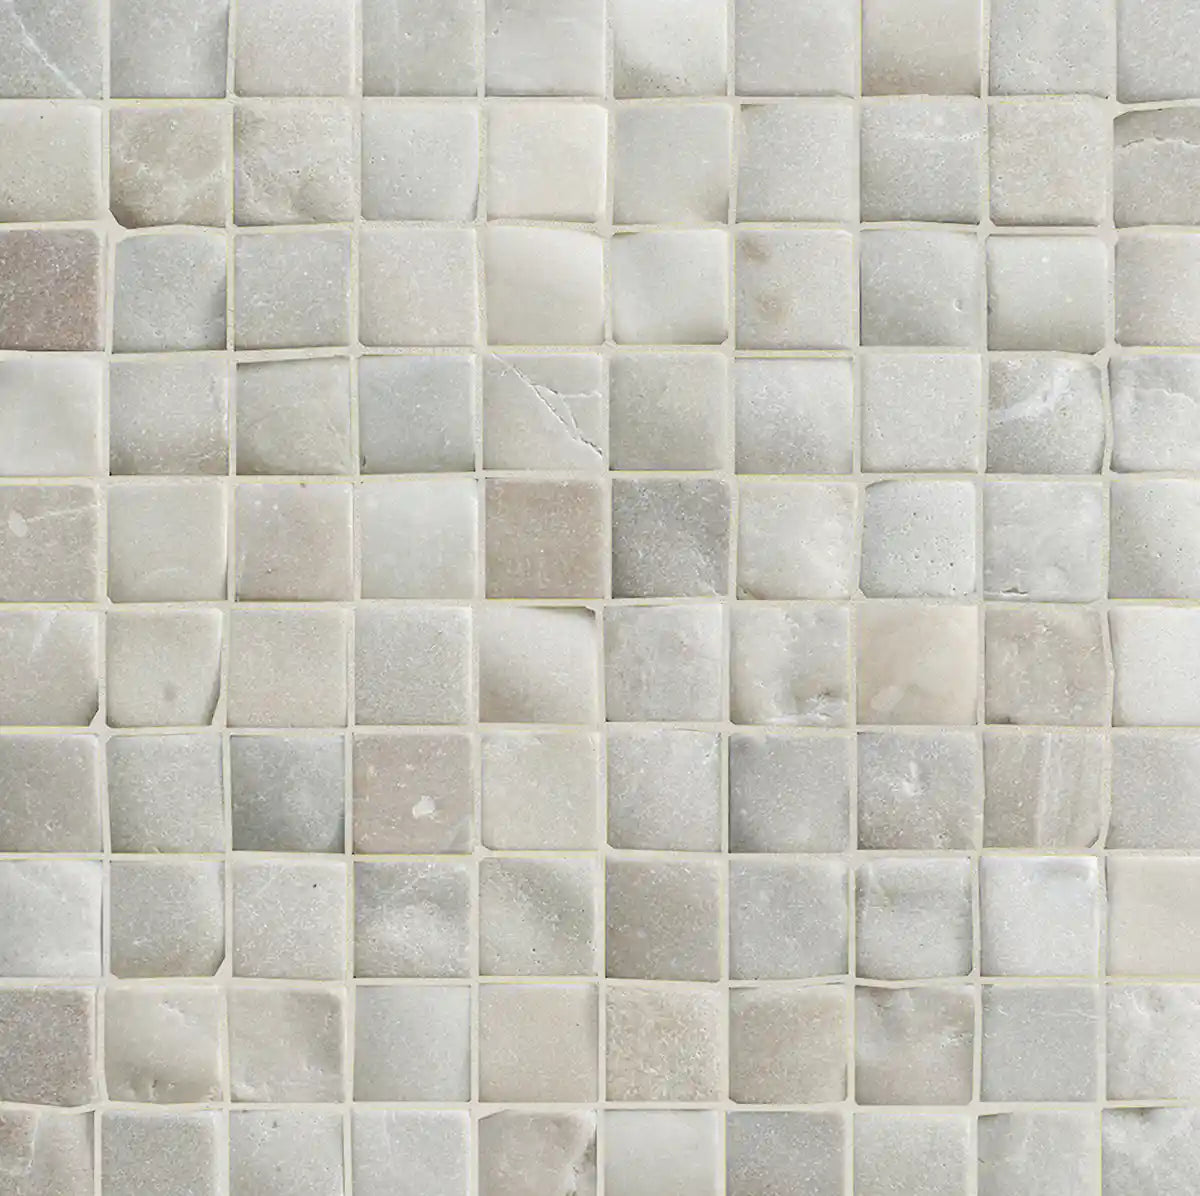 Tan Stone Mosaic Floor Tile, Molar 3 Natural Stone Mosaic Tile